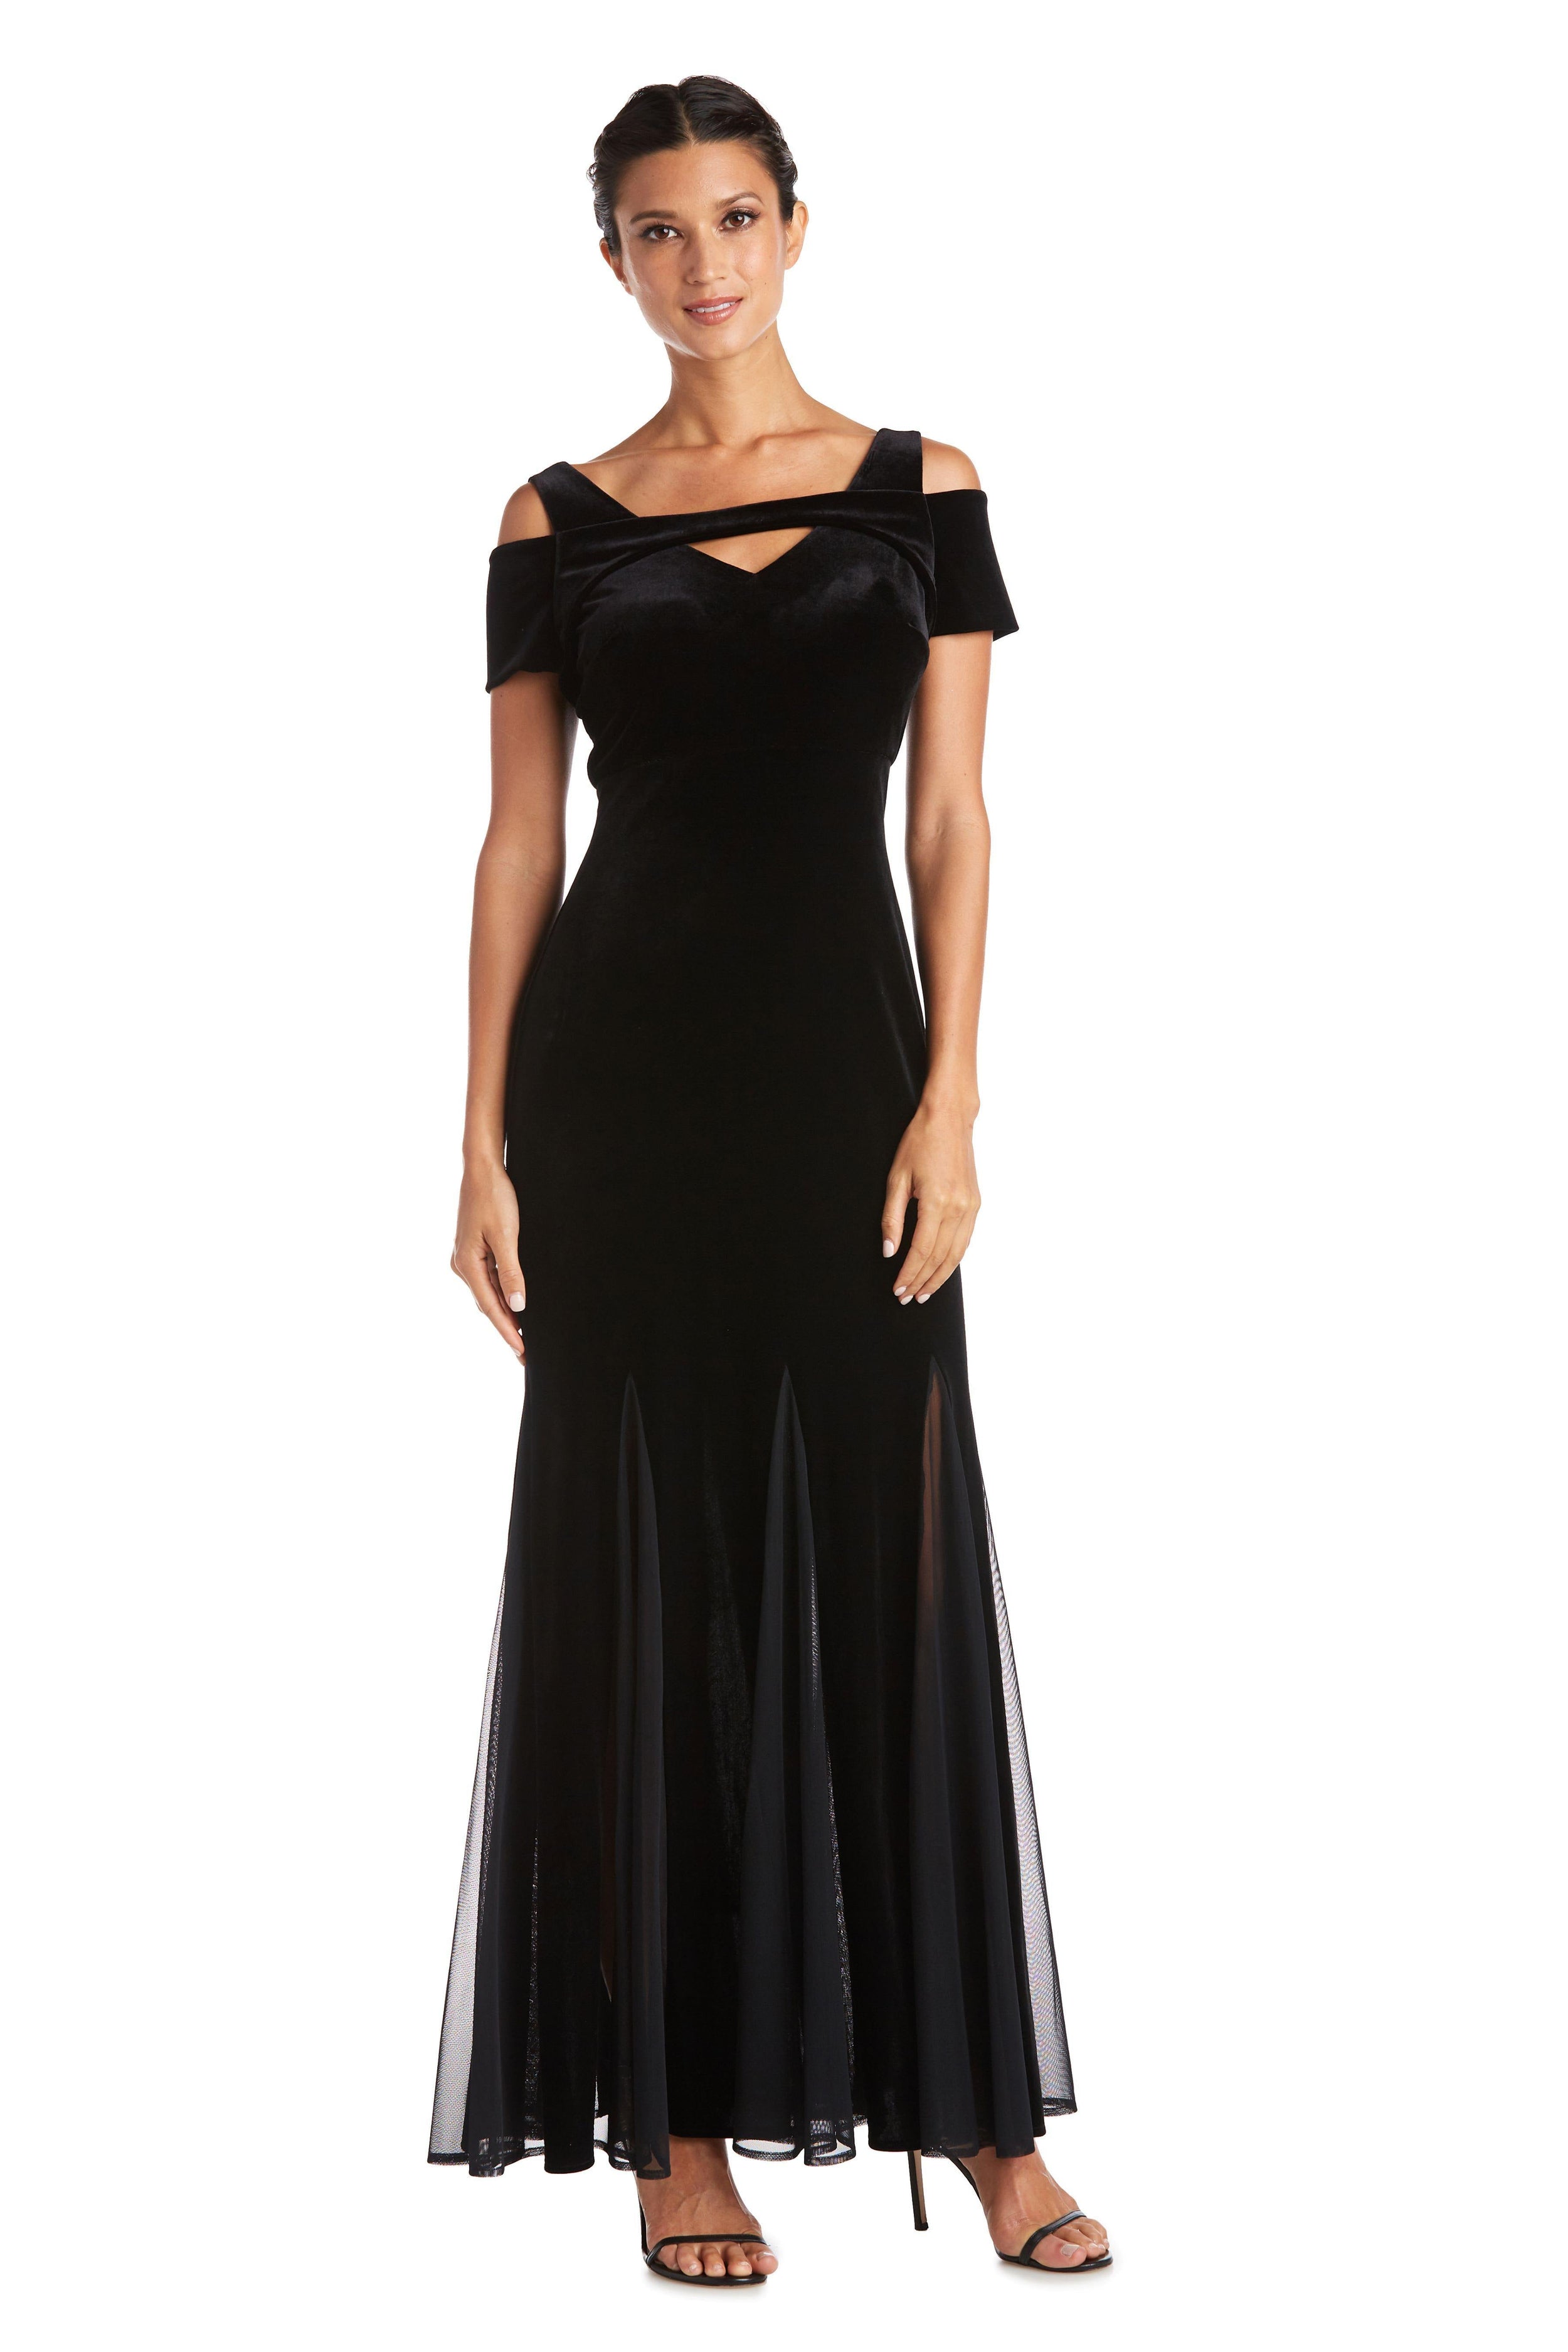 Nightway Long Formal Petite Velvet Dress 21999P - The Dress Outlet